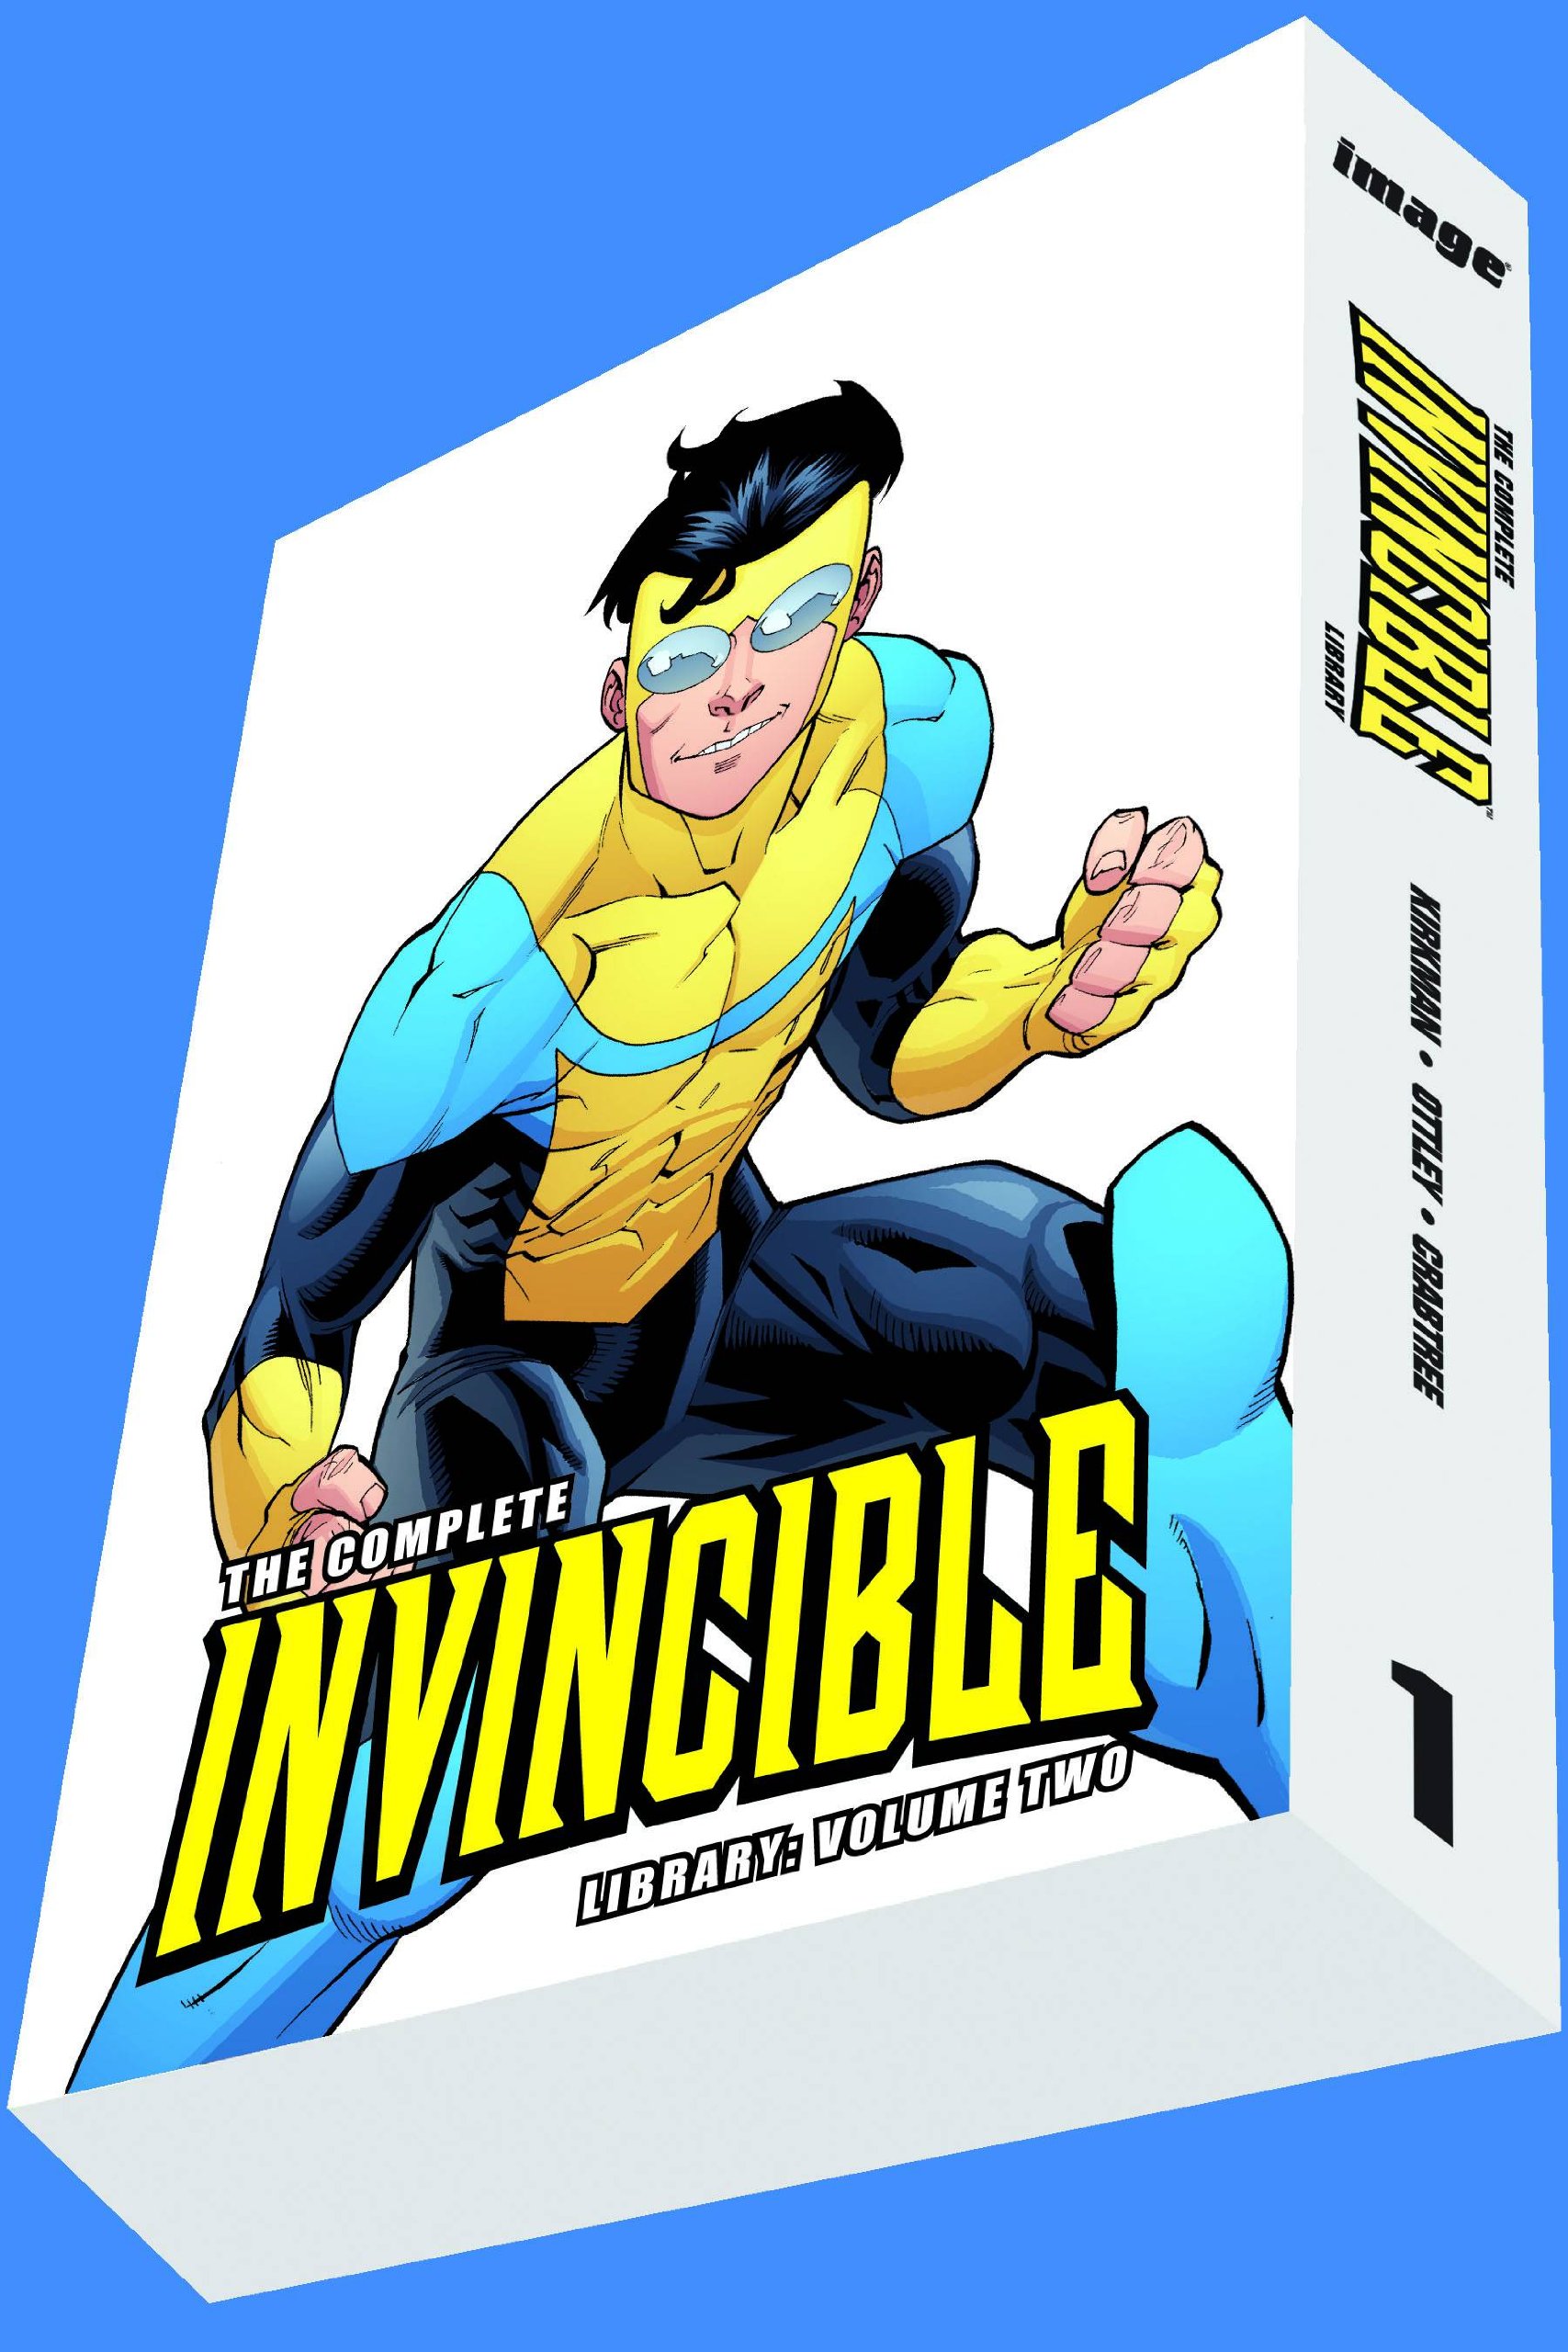 Complete Invincible Library Volume 2